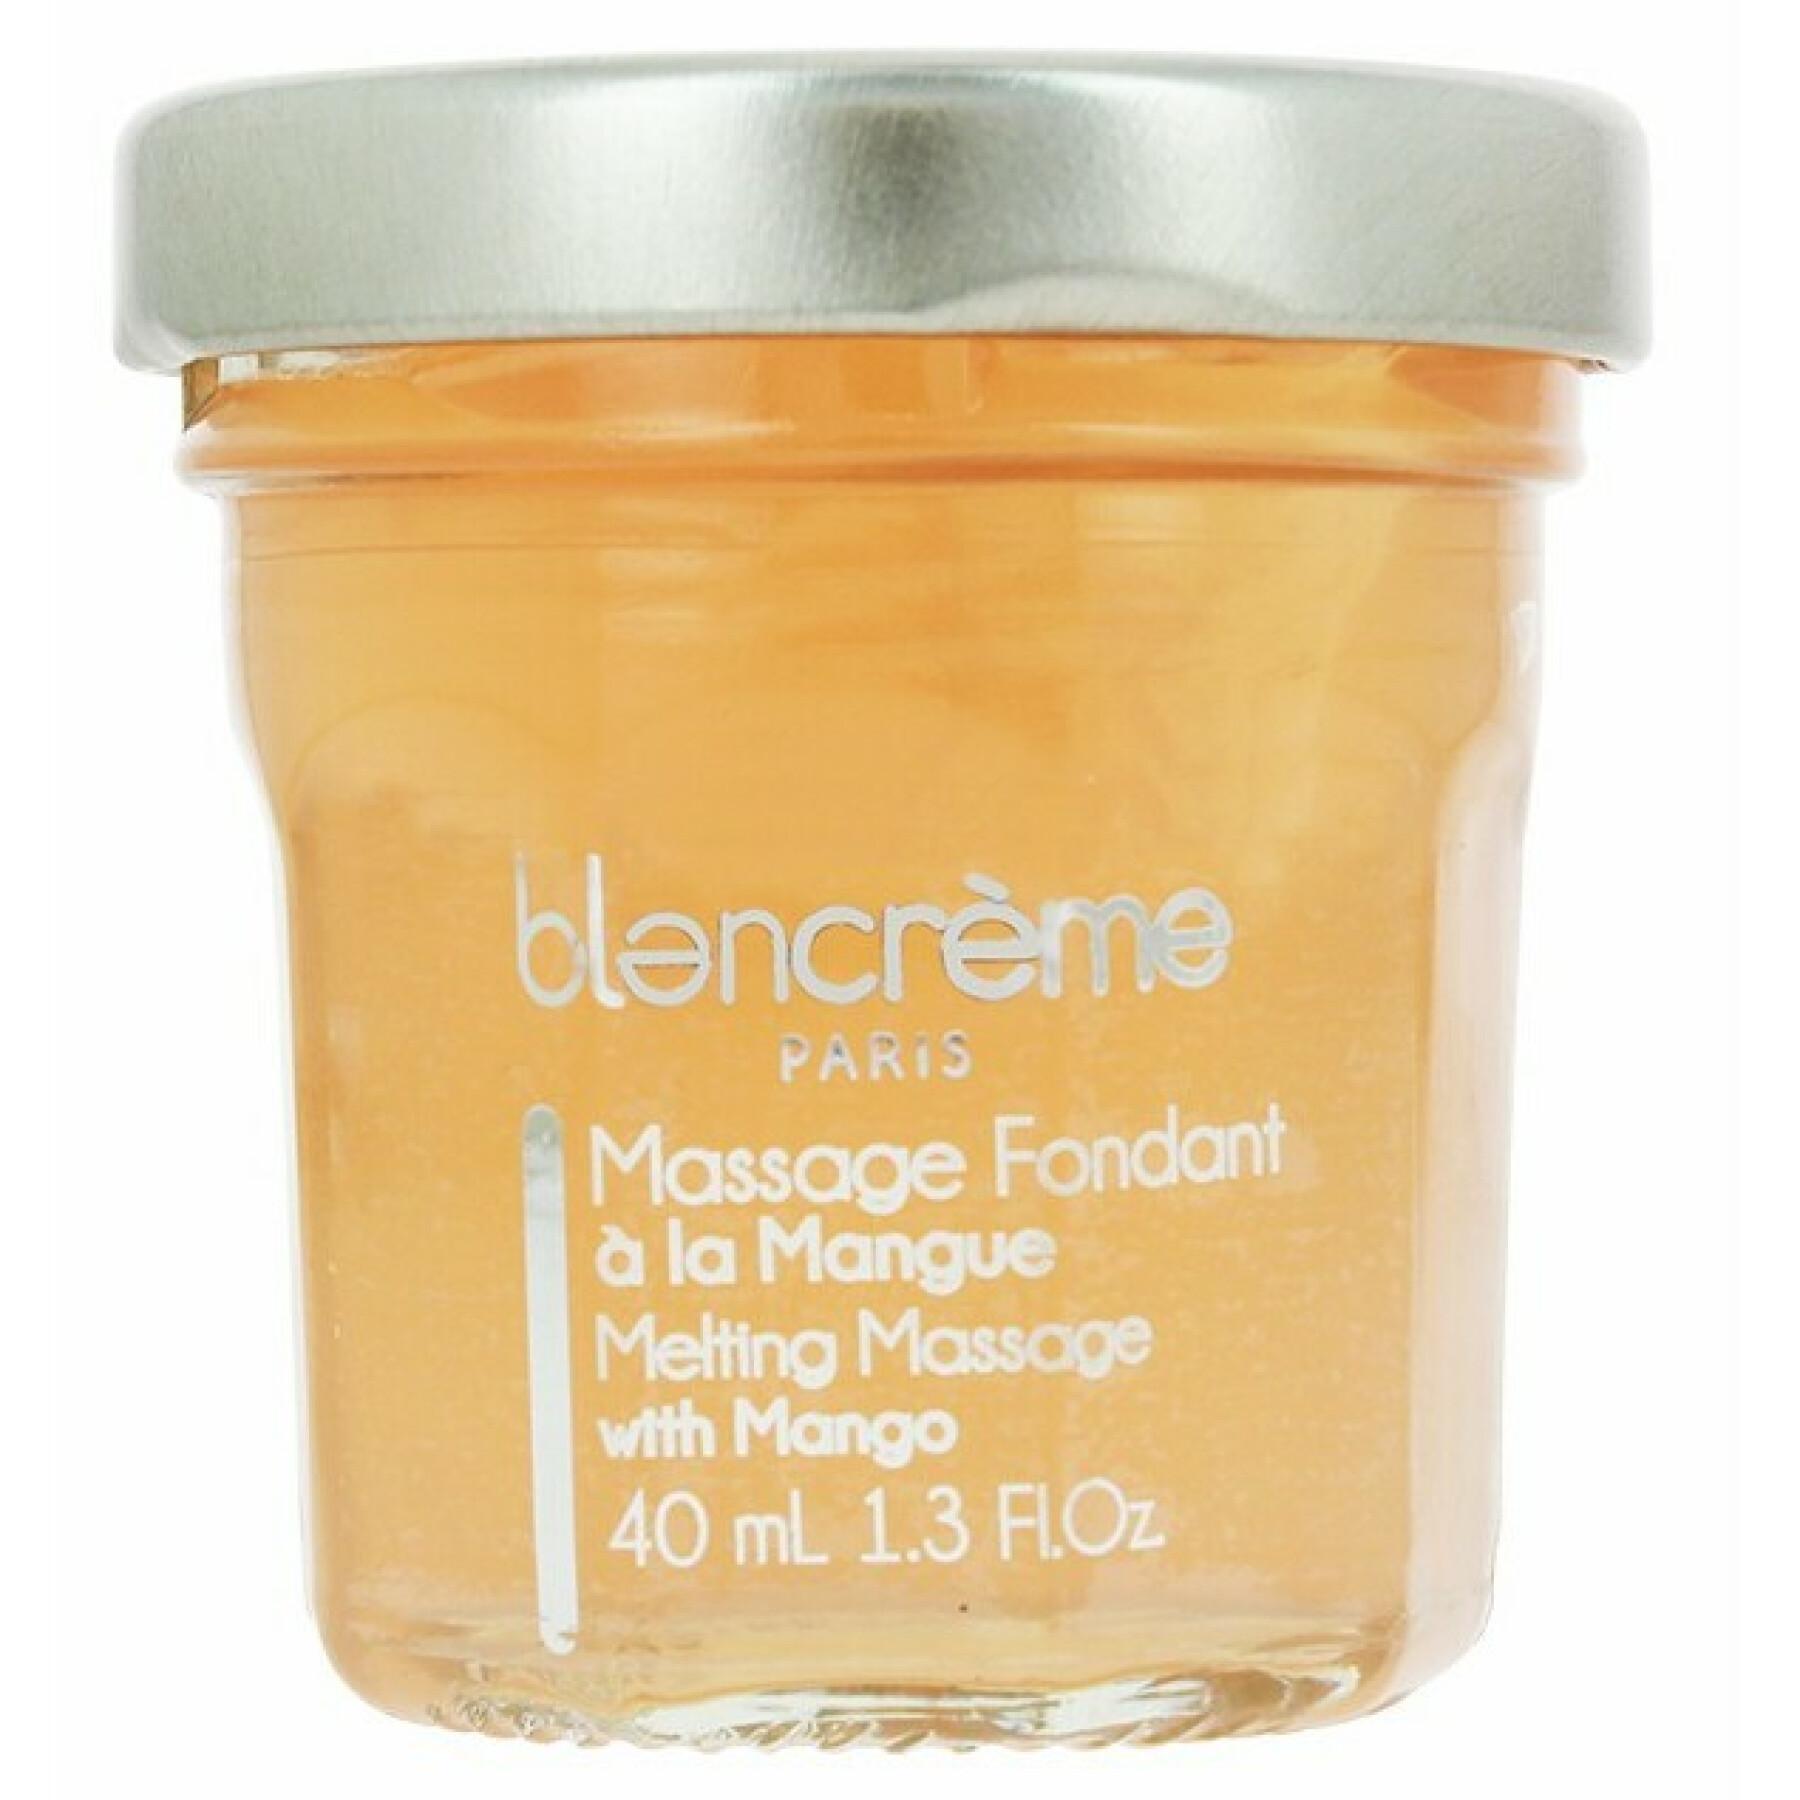 Melt-in-the-mouth massage - mango - Blancreme 40 ml